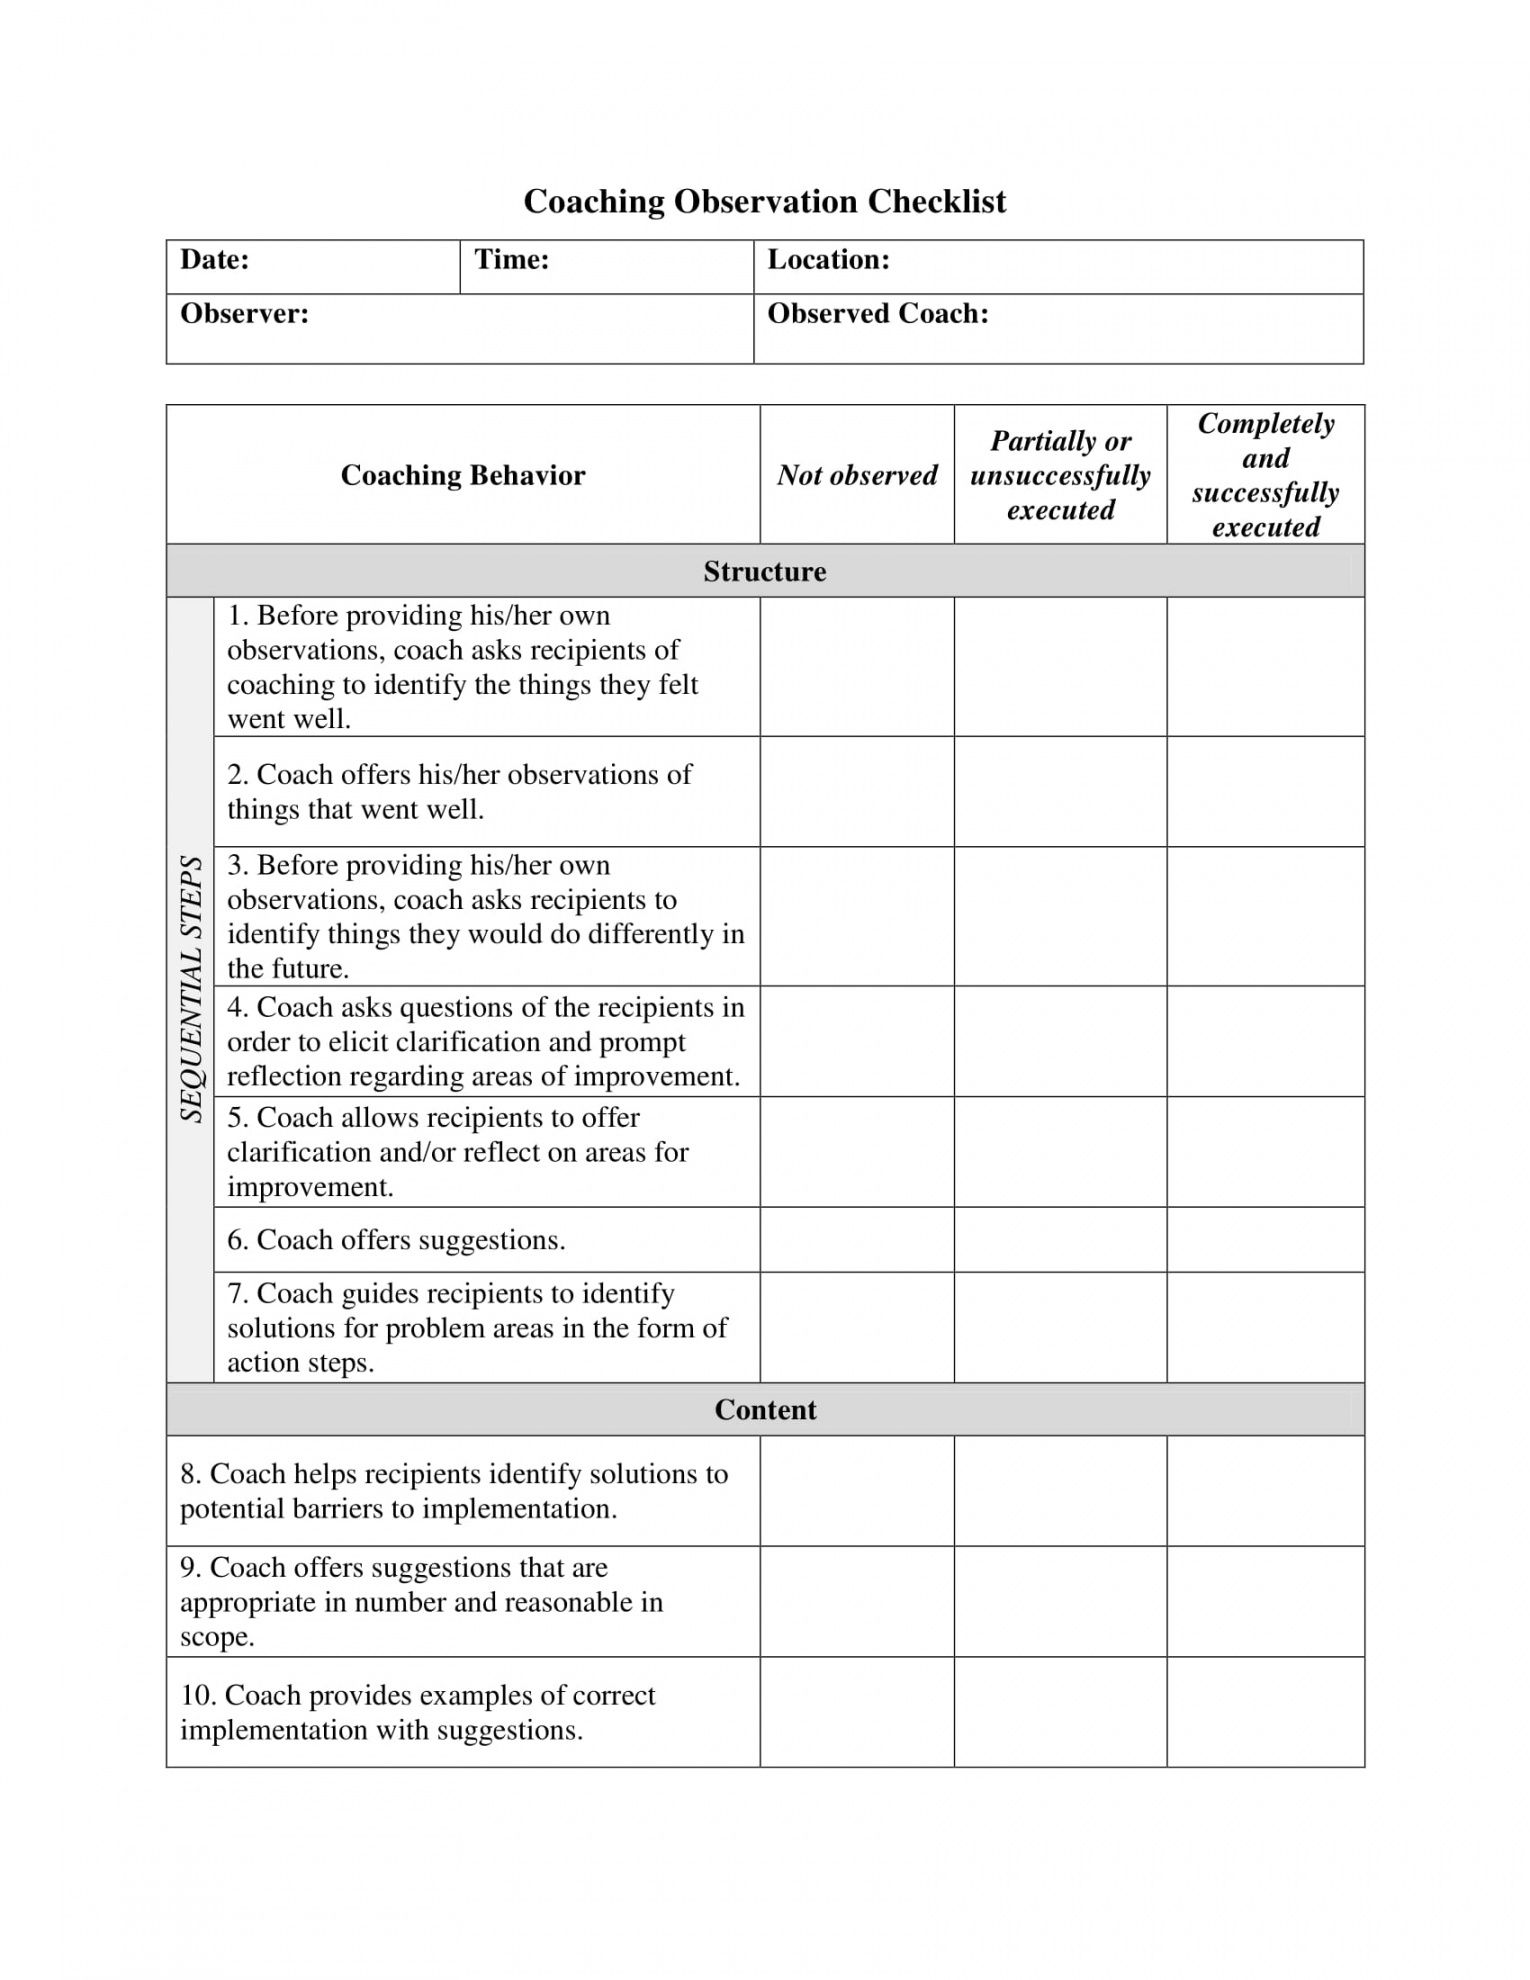 coaching-checklist-template